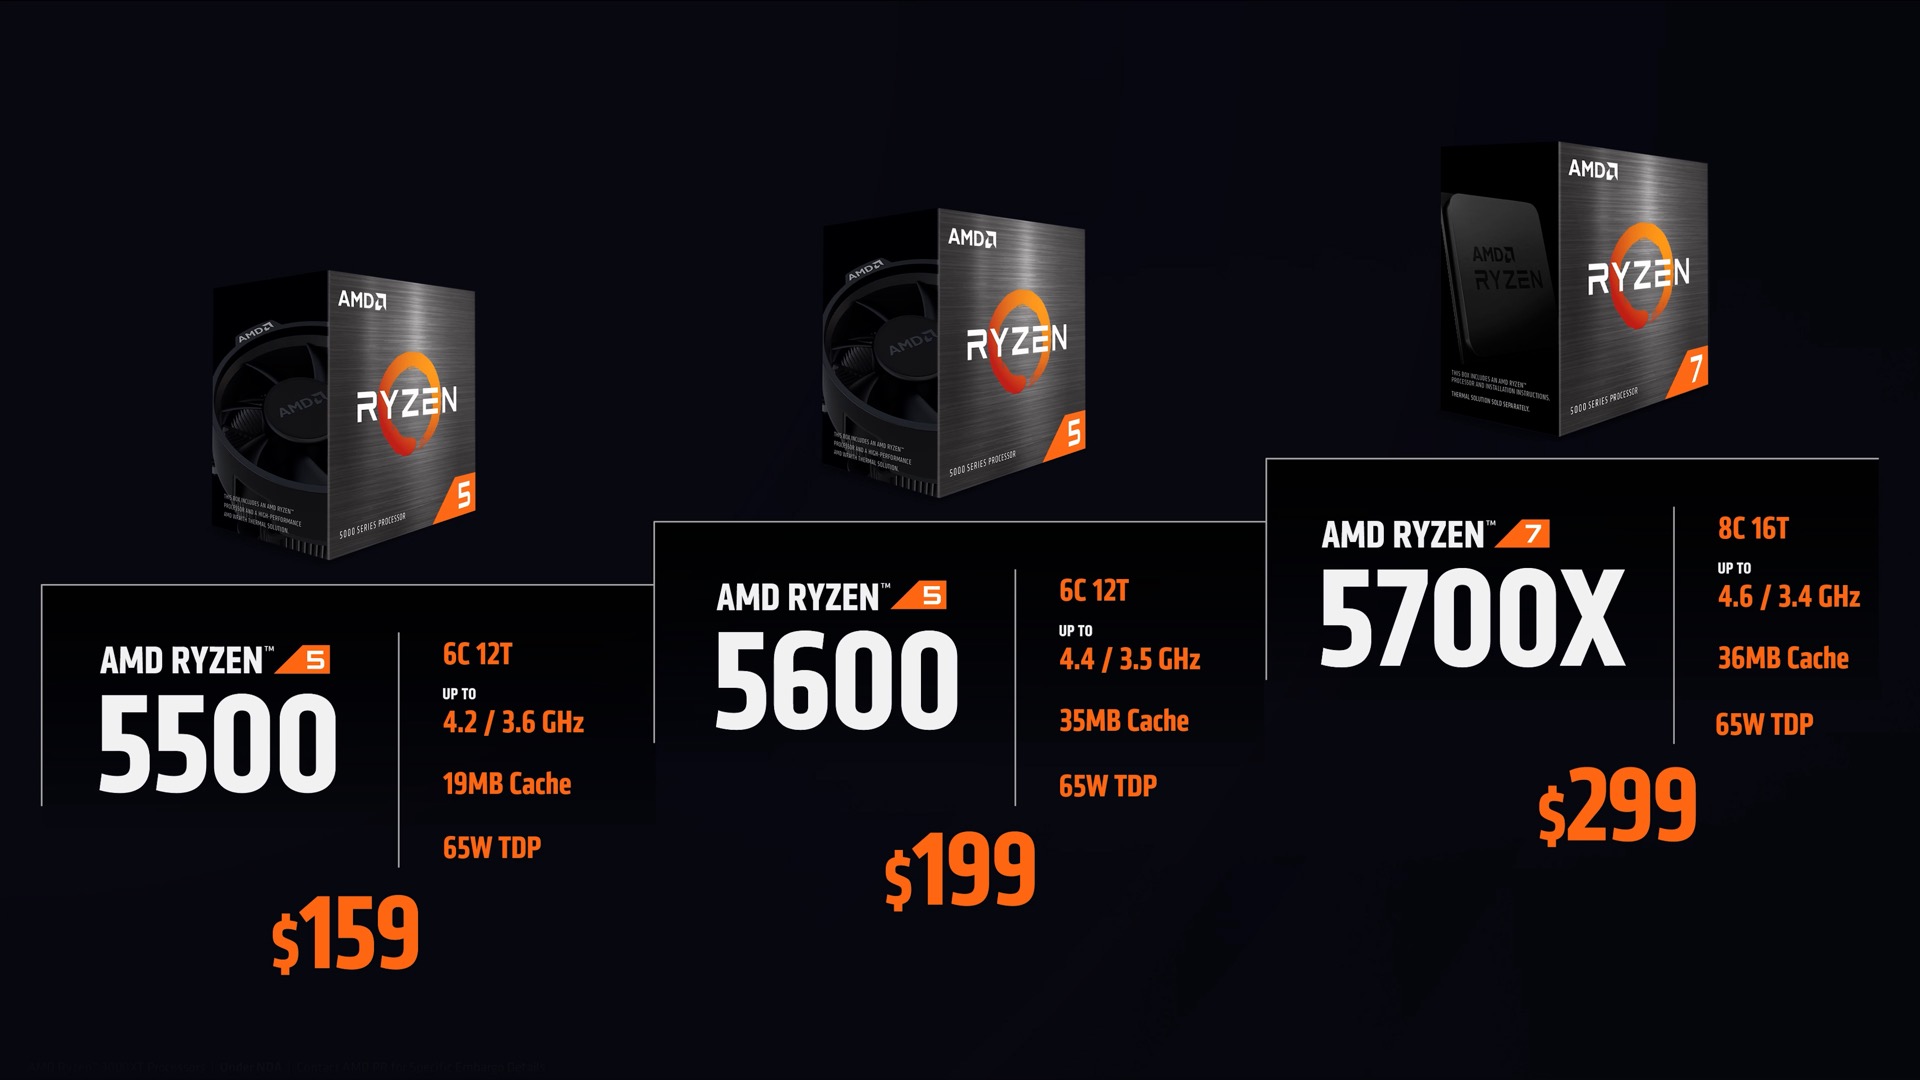 The best Ryzen CPU: Which AMD Ryzen should I buy?